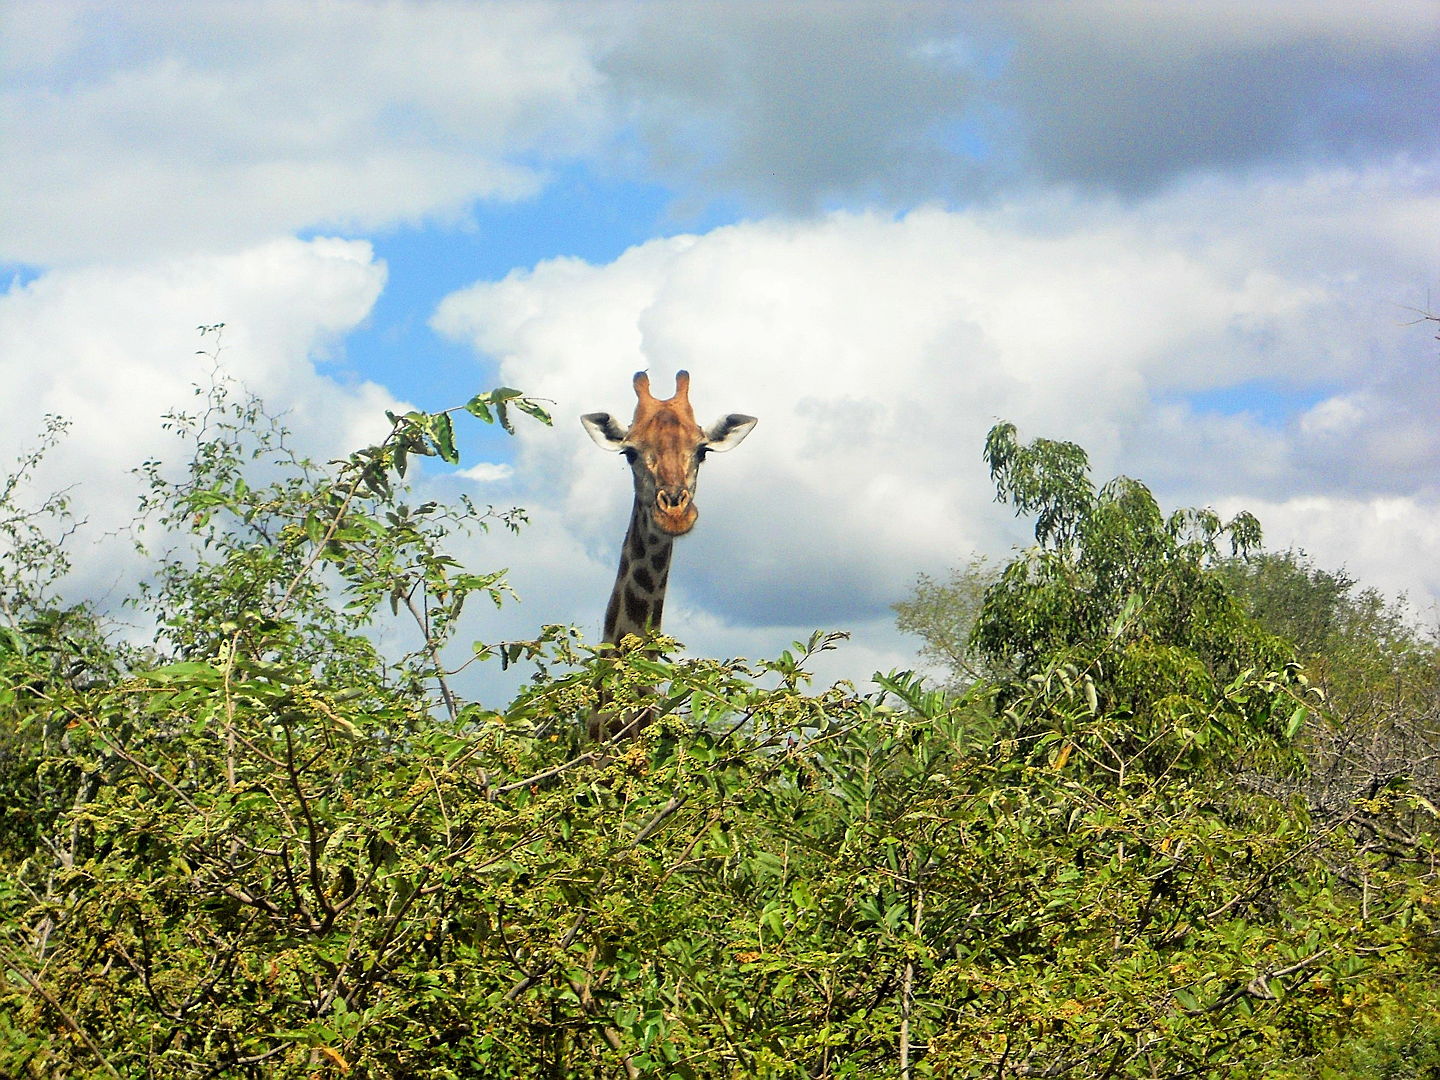  Hoedspruit
- Giraffe in wildlife estate